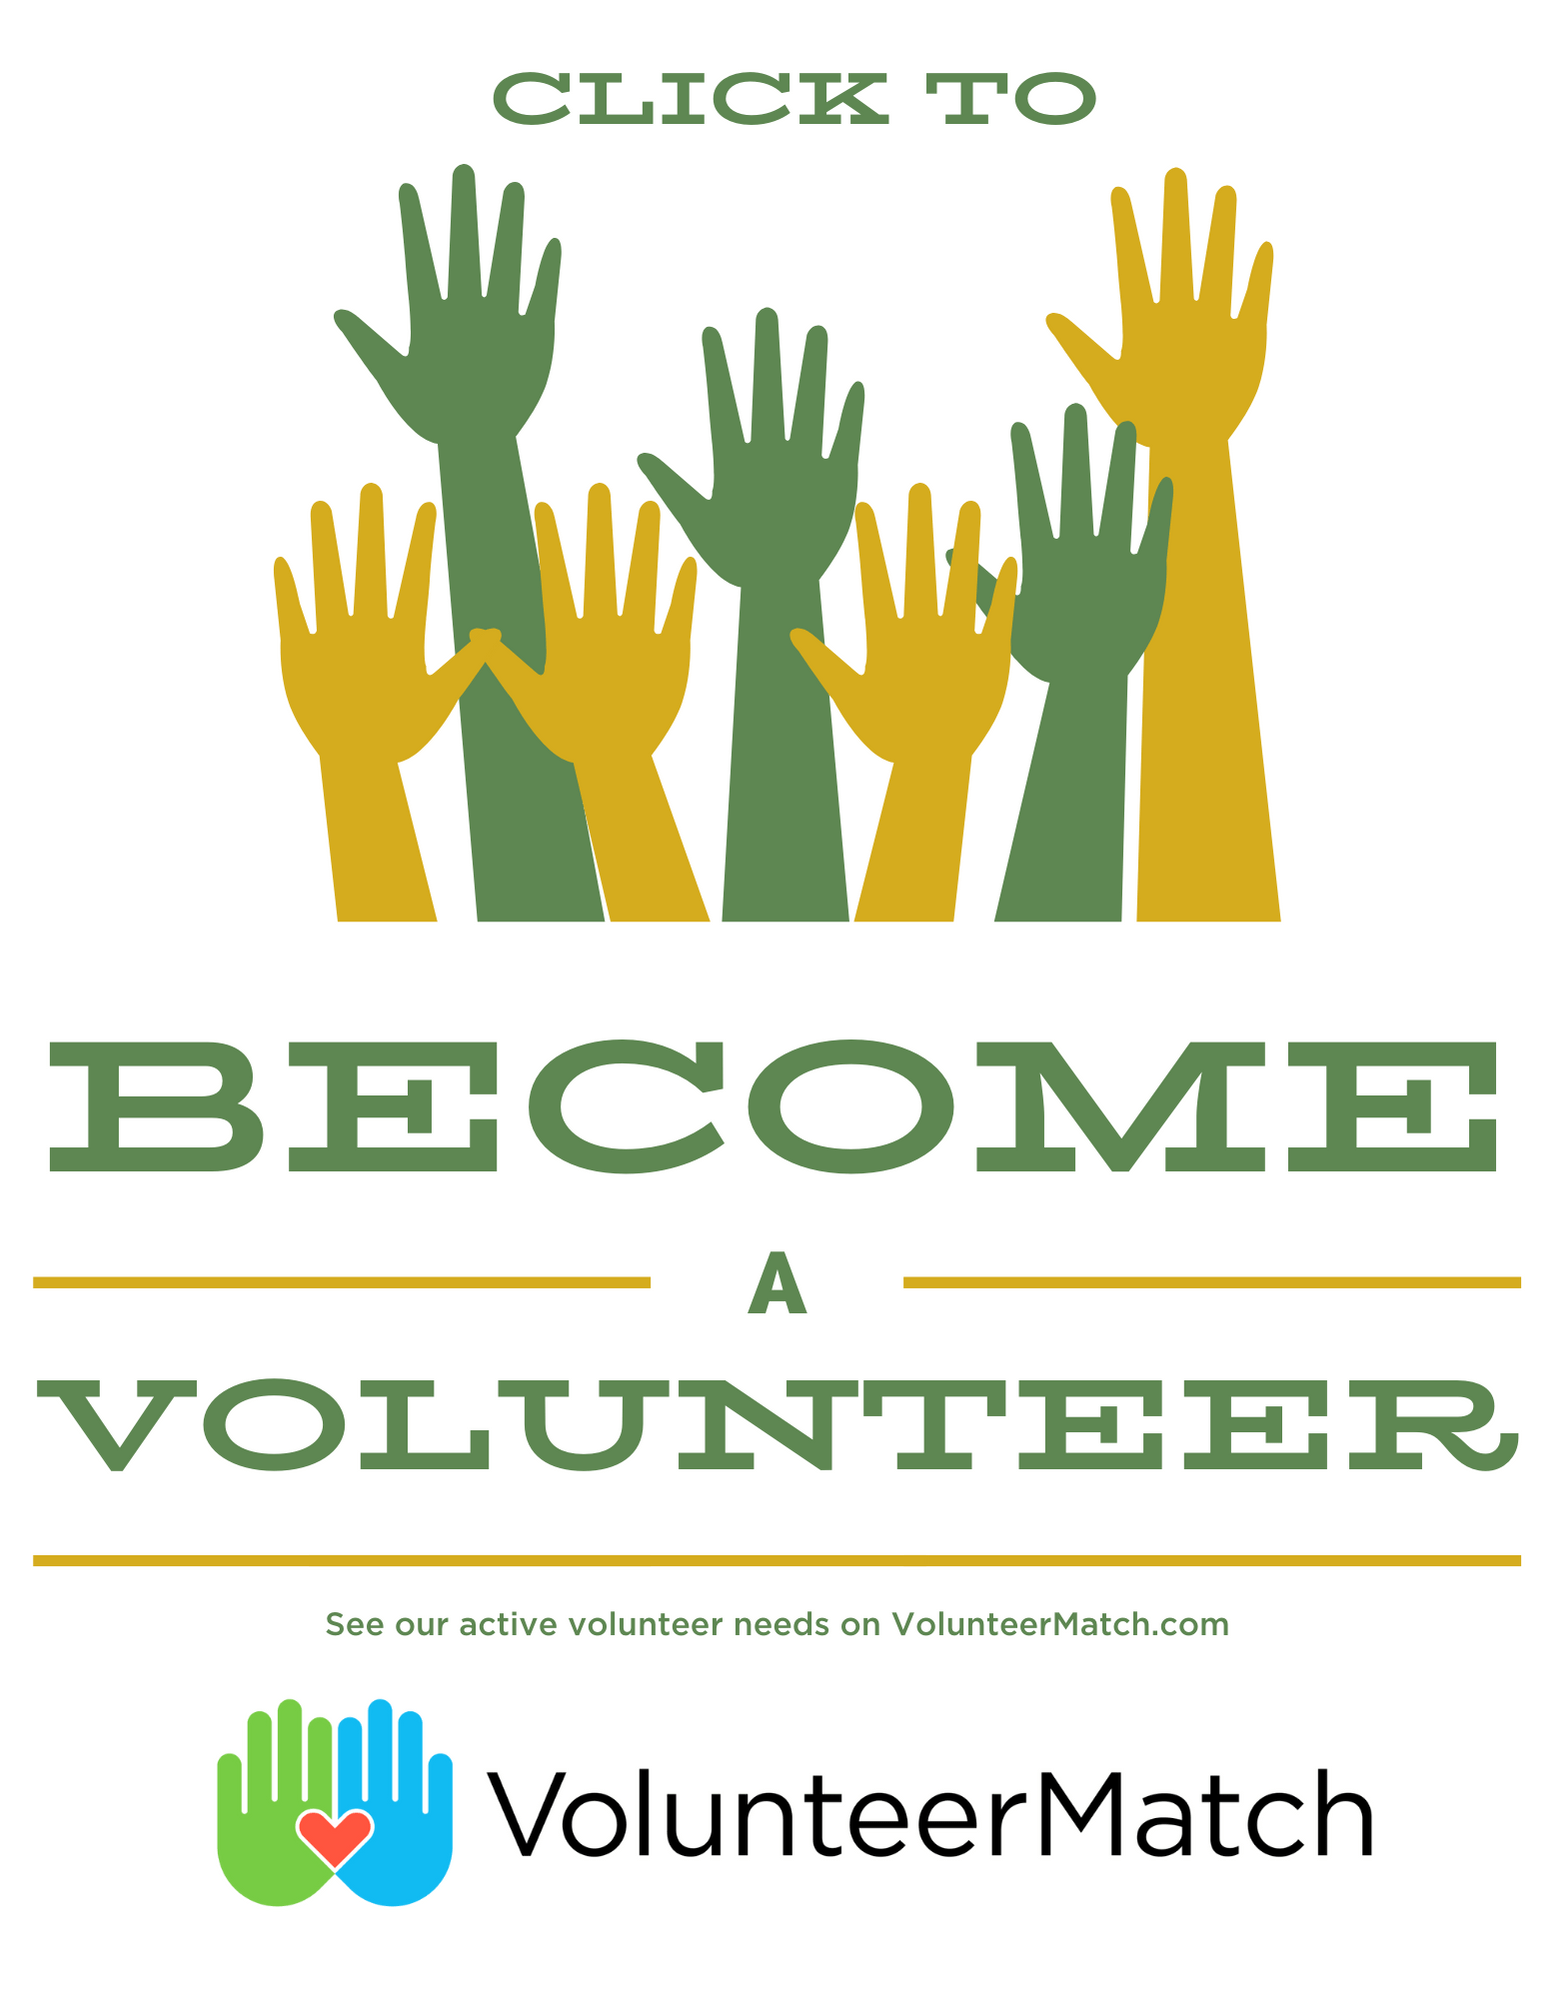 A banner encouraging volunteering at the Conservancy through VolunteerMatch.com